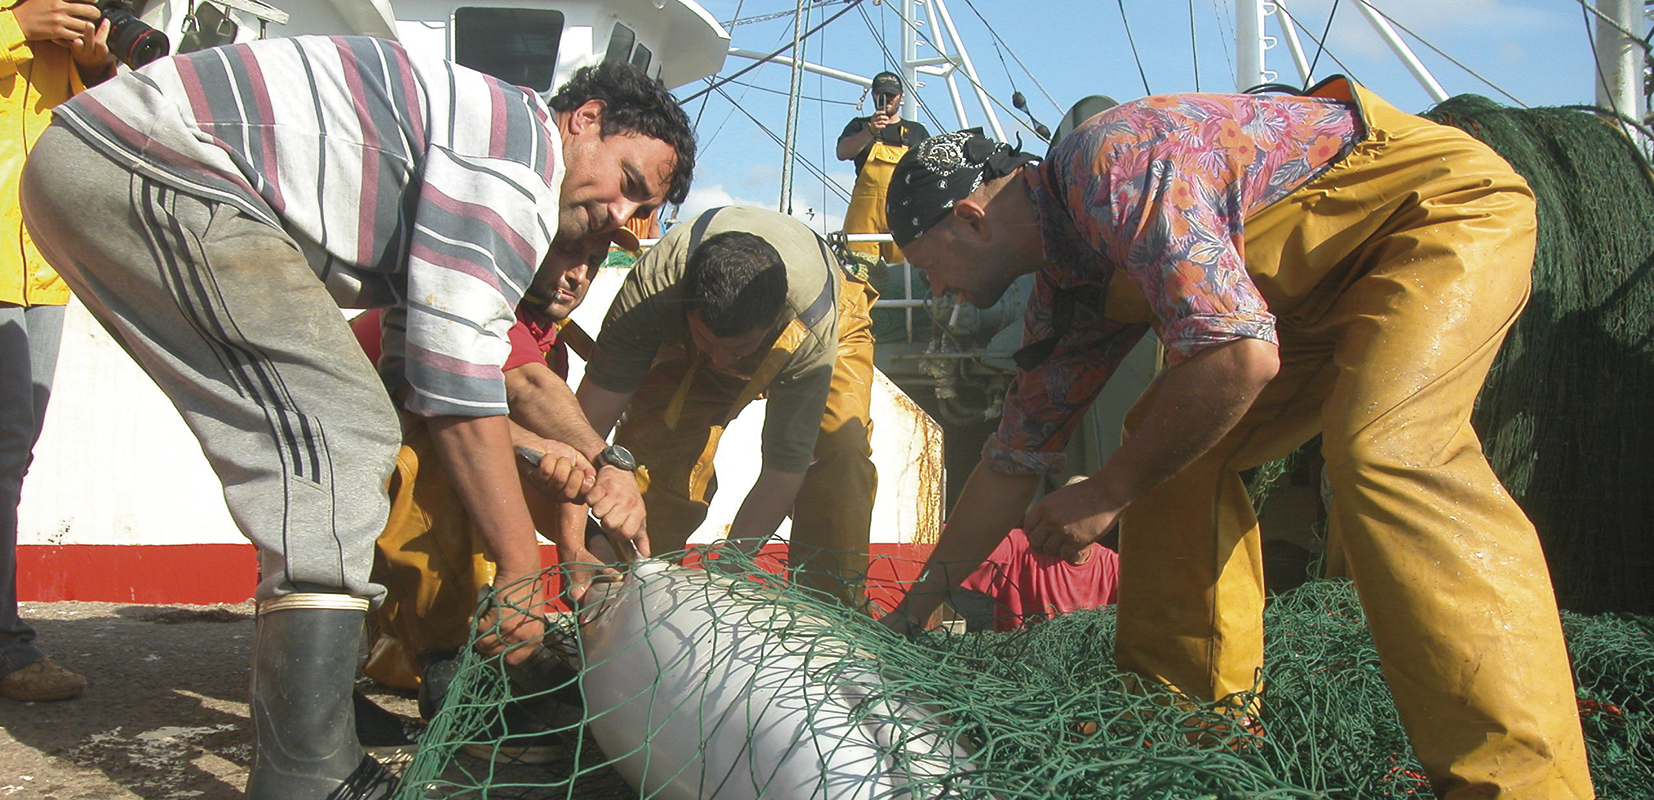 Pescadores sacando un pez de la red de pesca